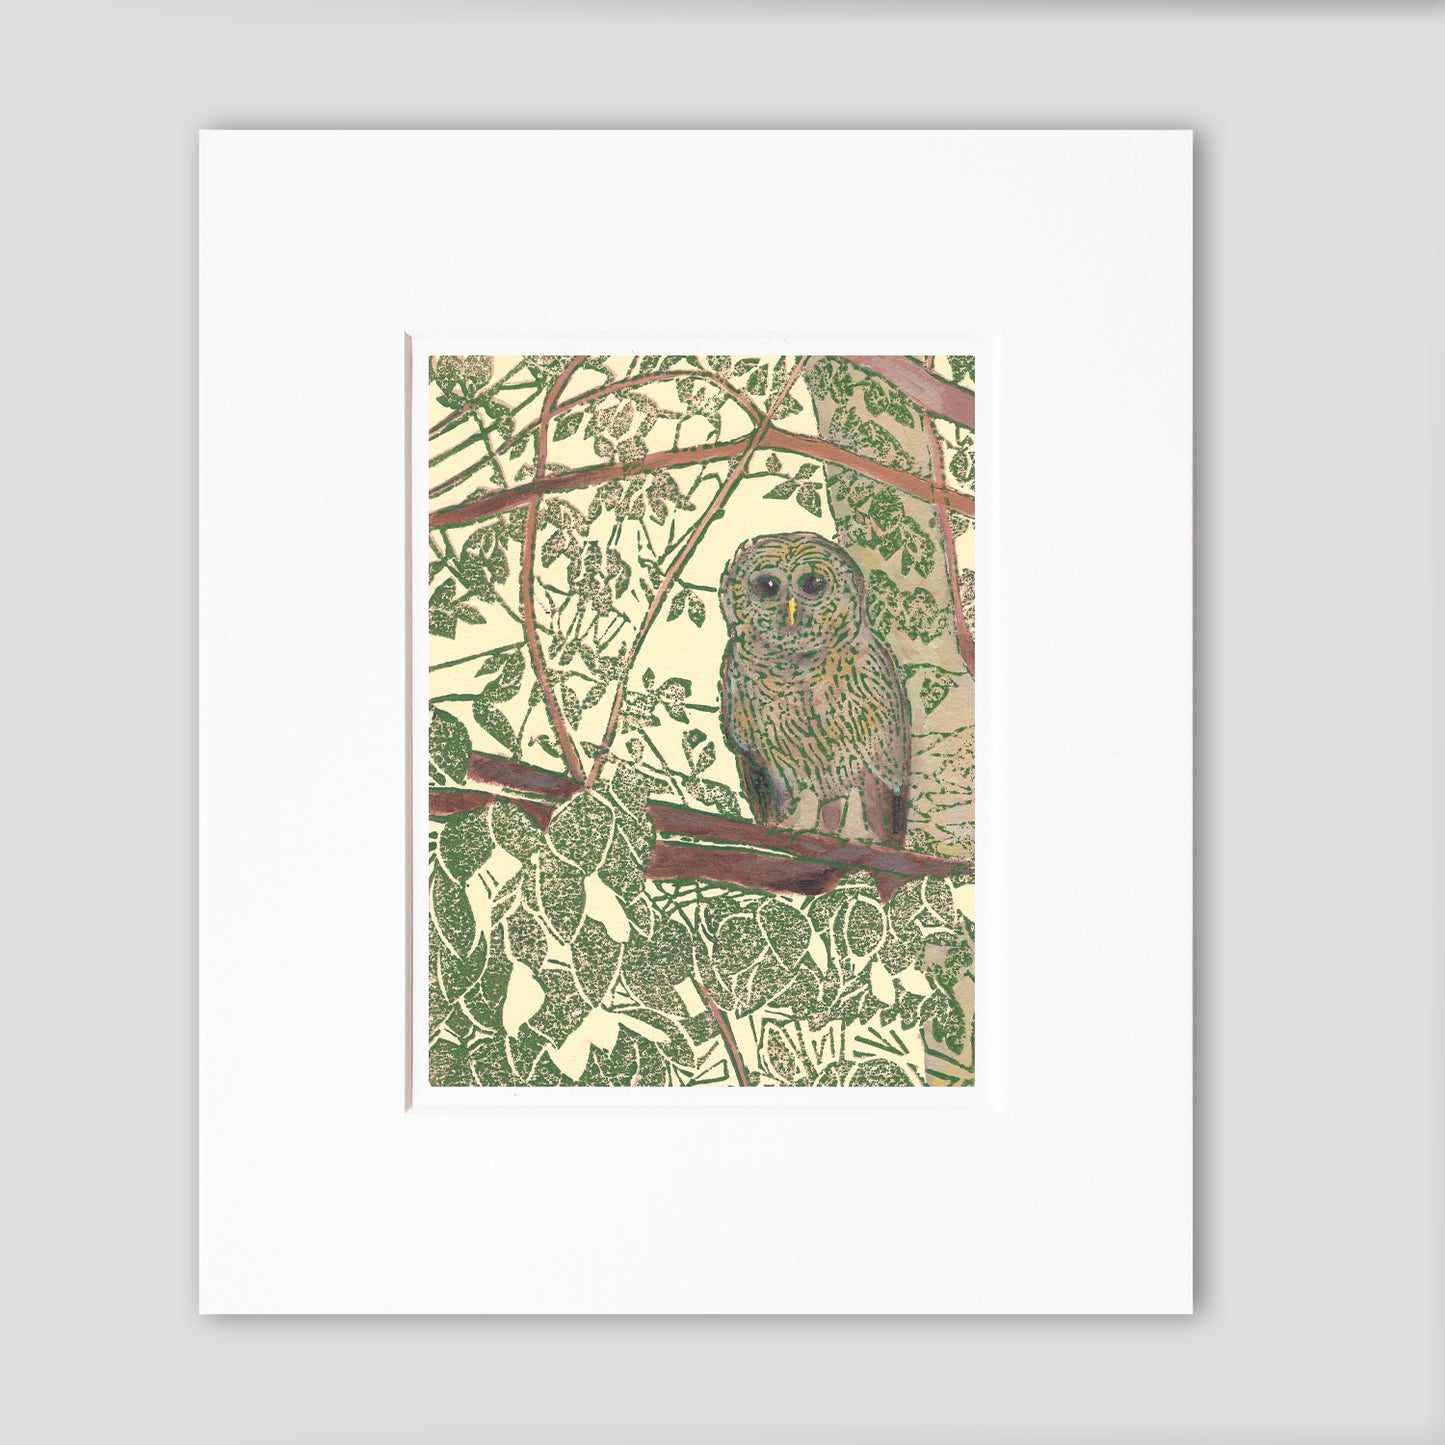 Owl art featuring a Barred Owl by printmaker Natalia Wohletz of Peninsula Prints, Mackinac Island, titled Hidden Owl.